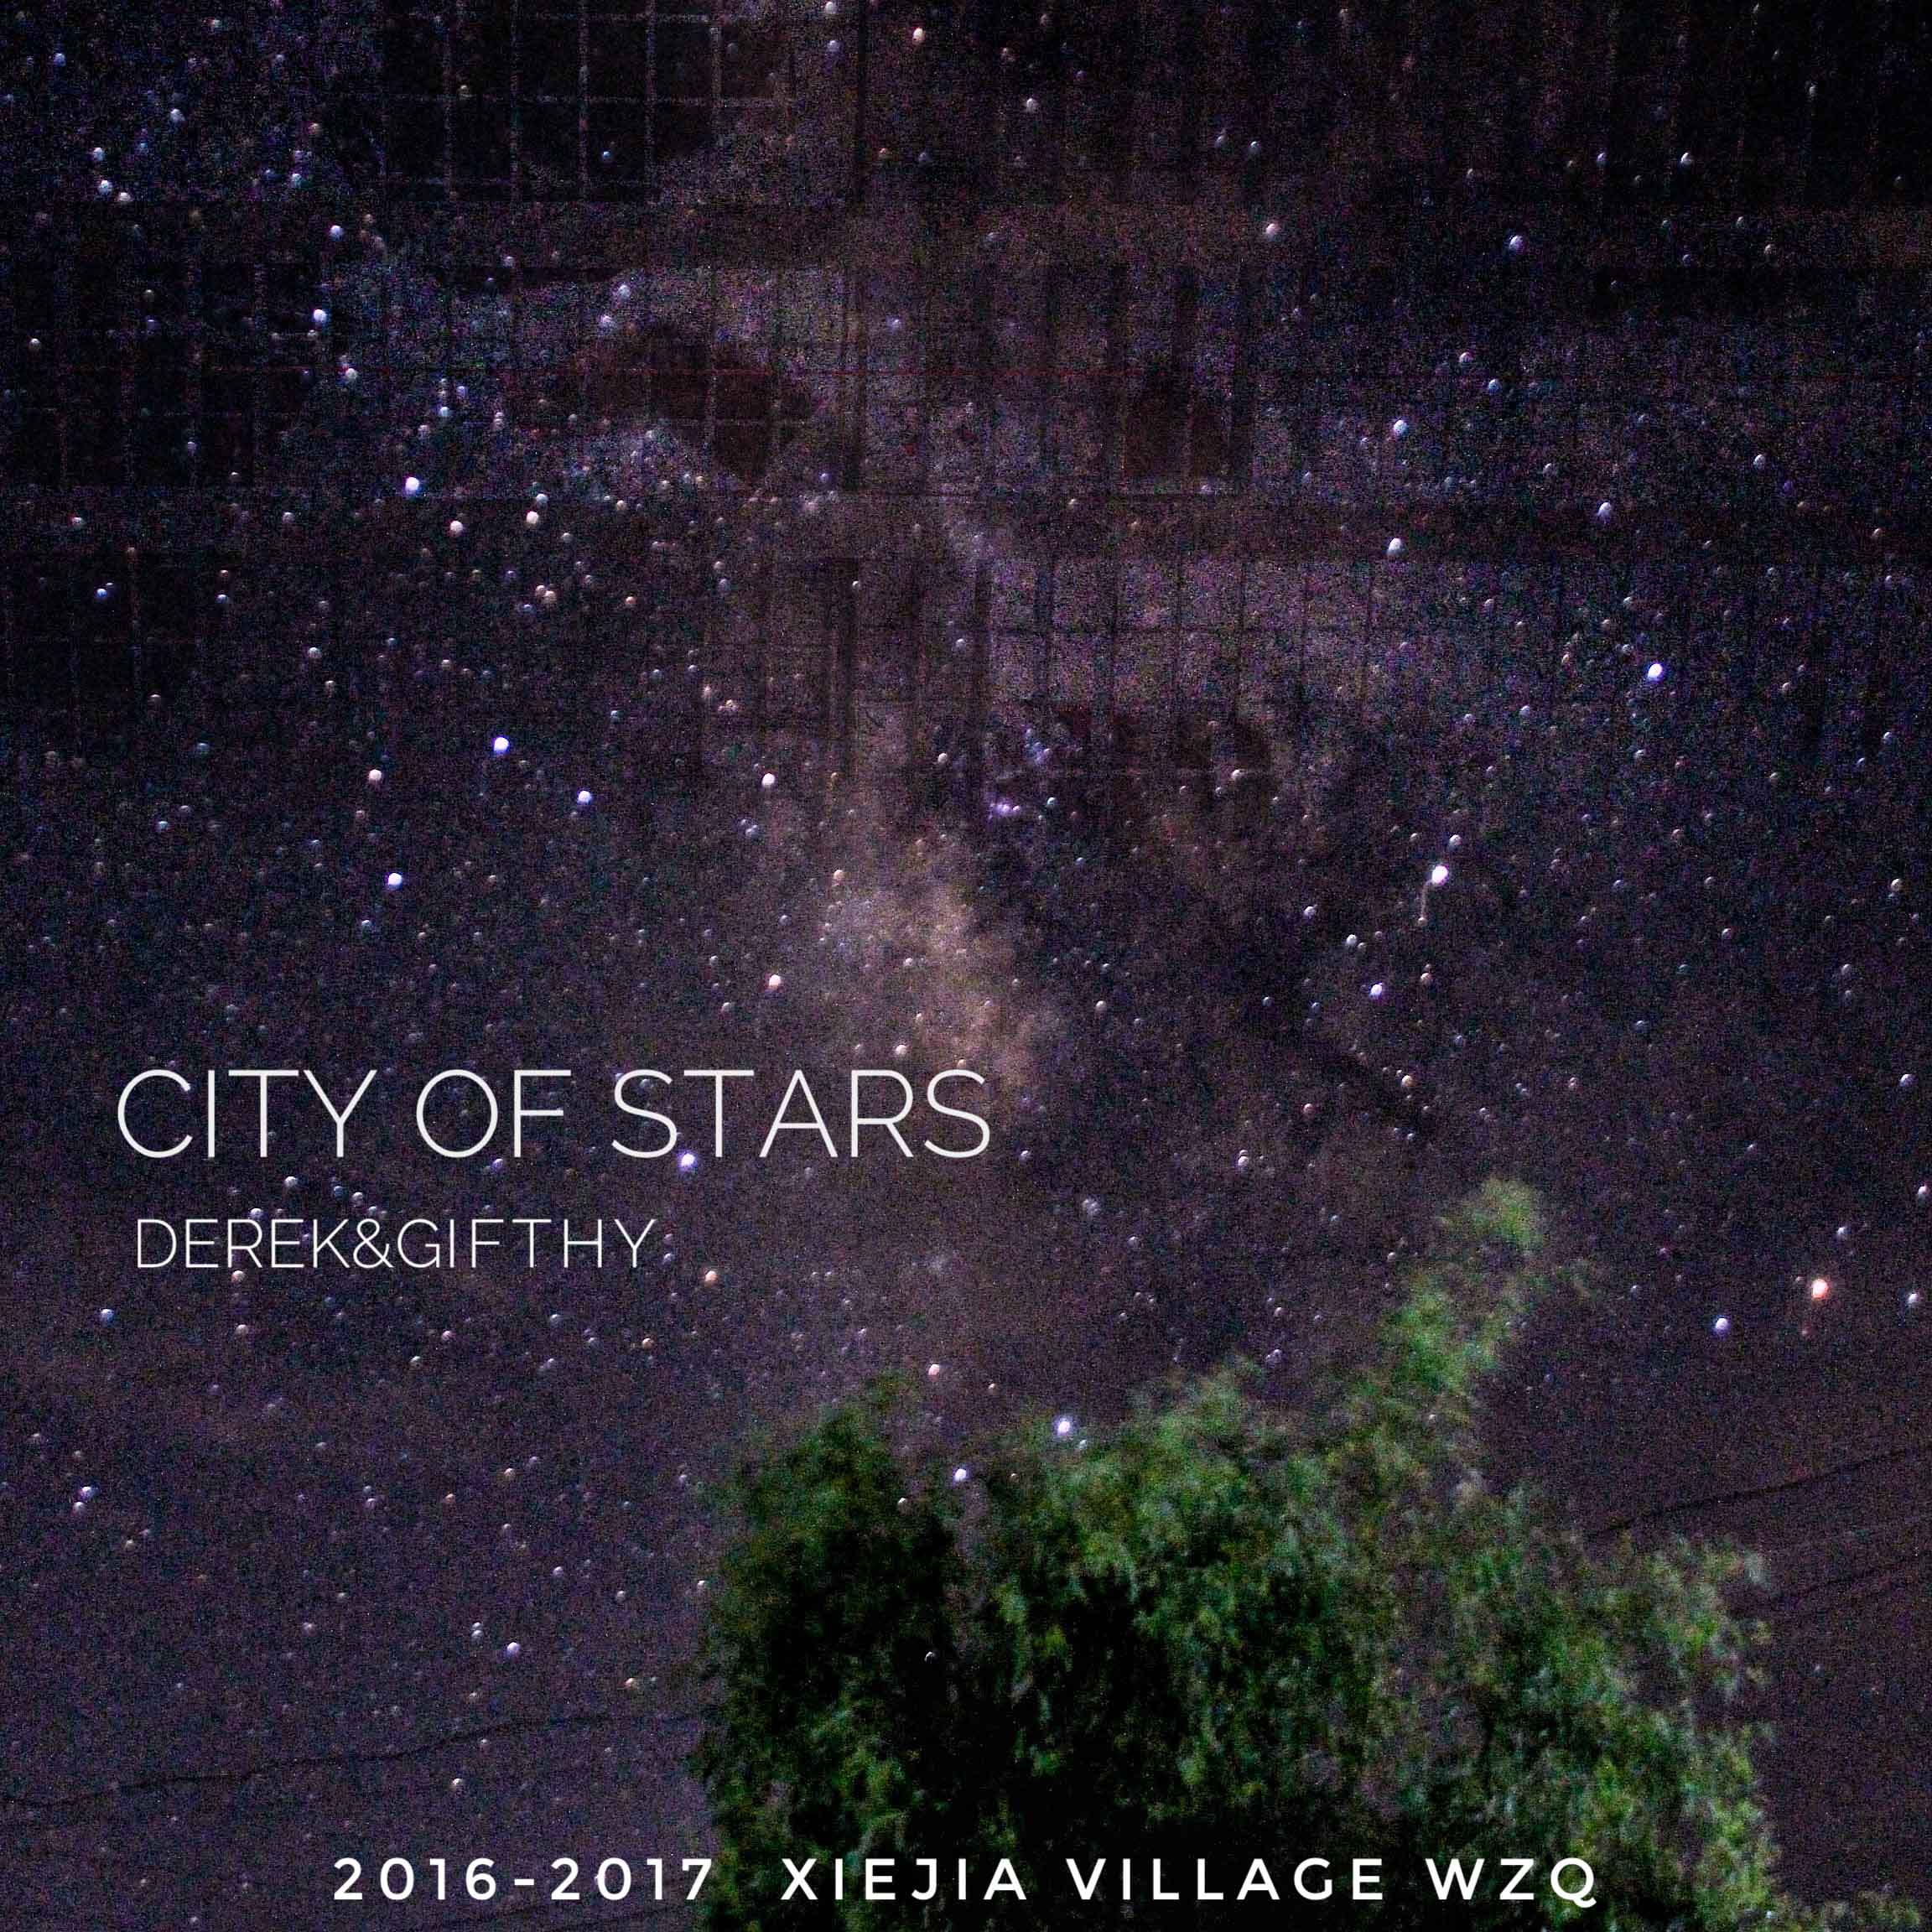 city of stars